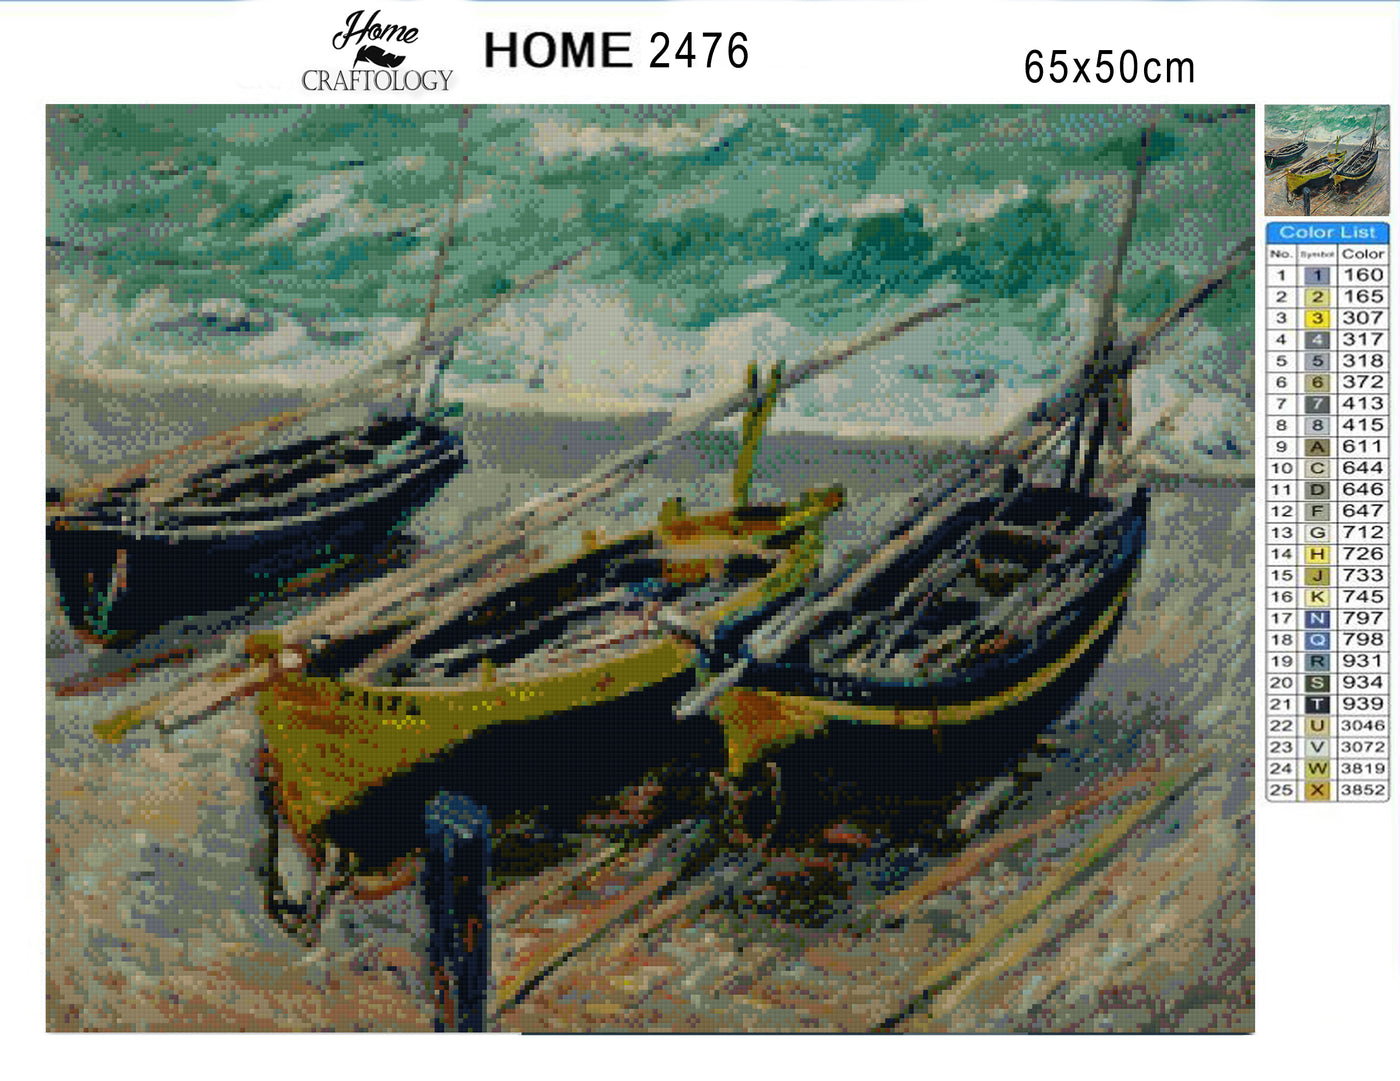 Three Fishing Boats - Premium Diamond Painting Kit